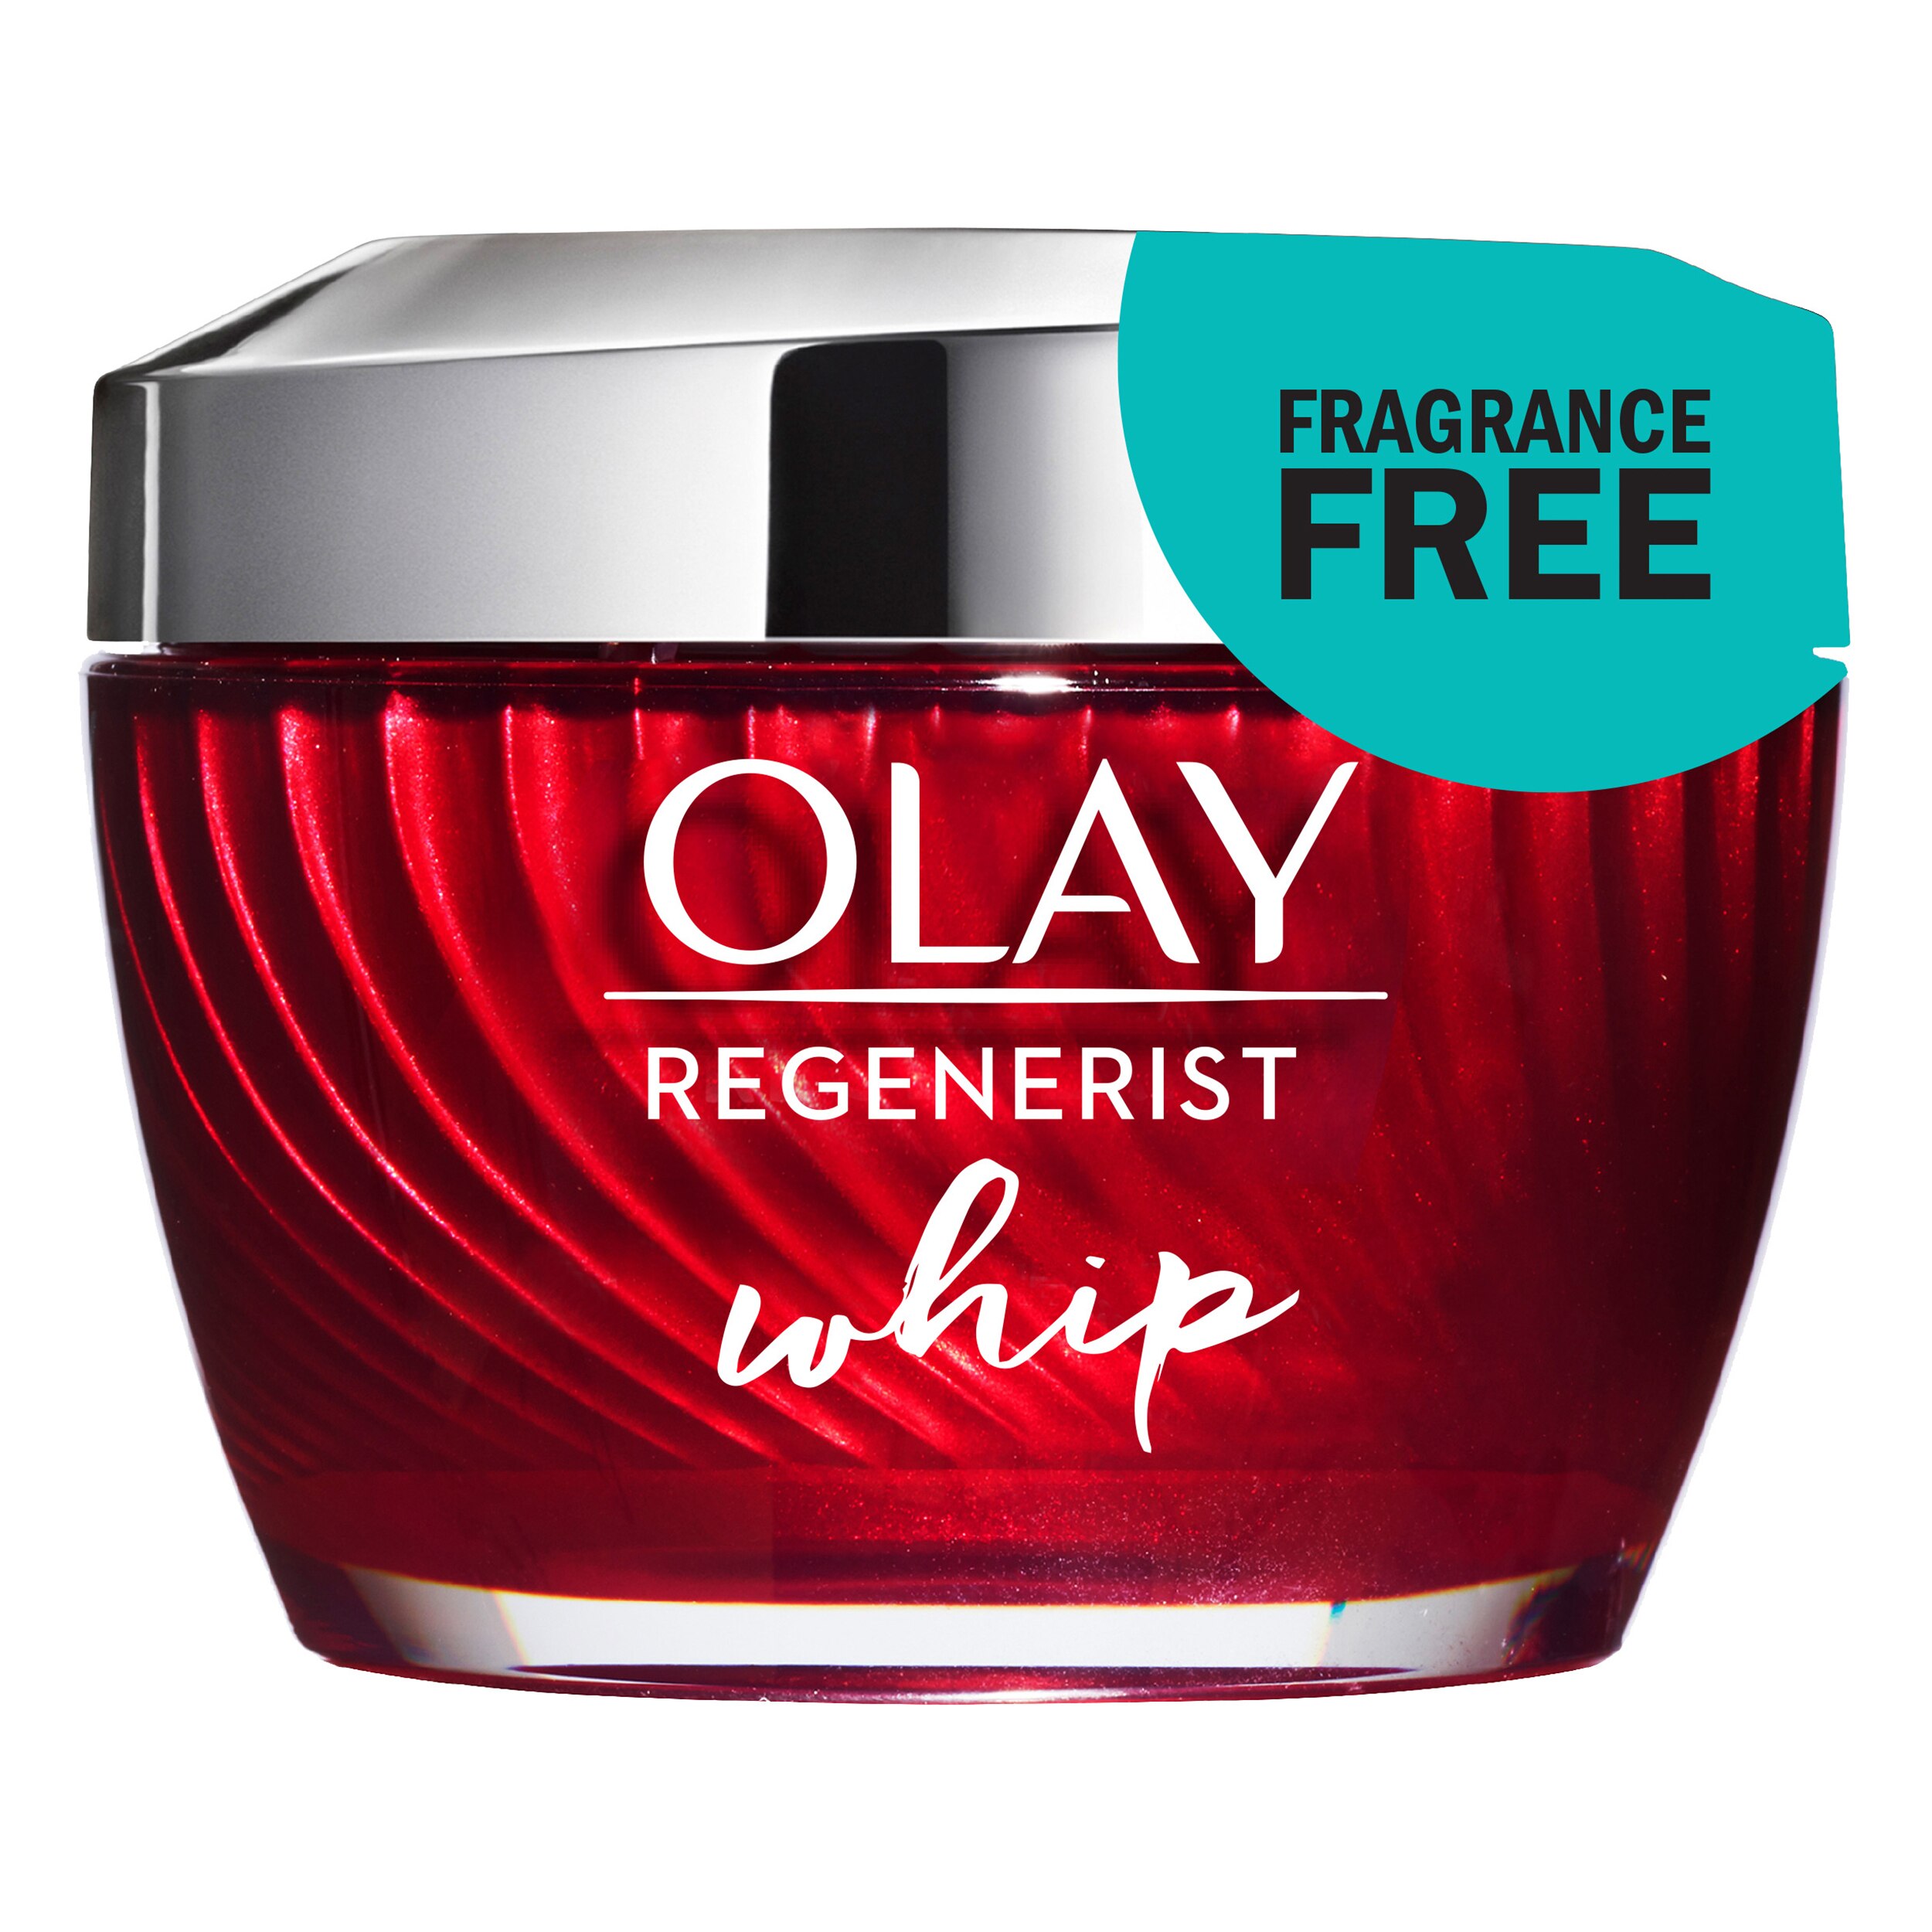 Olay Regenerist Whip Face Moisturizer Fragrance-Free, 1.7 OZ